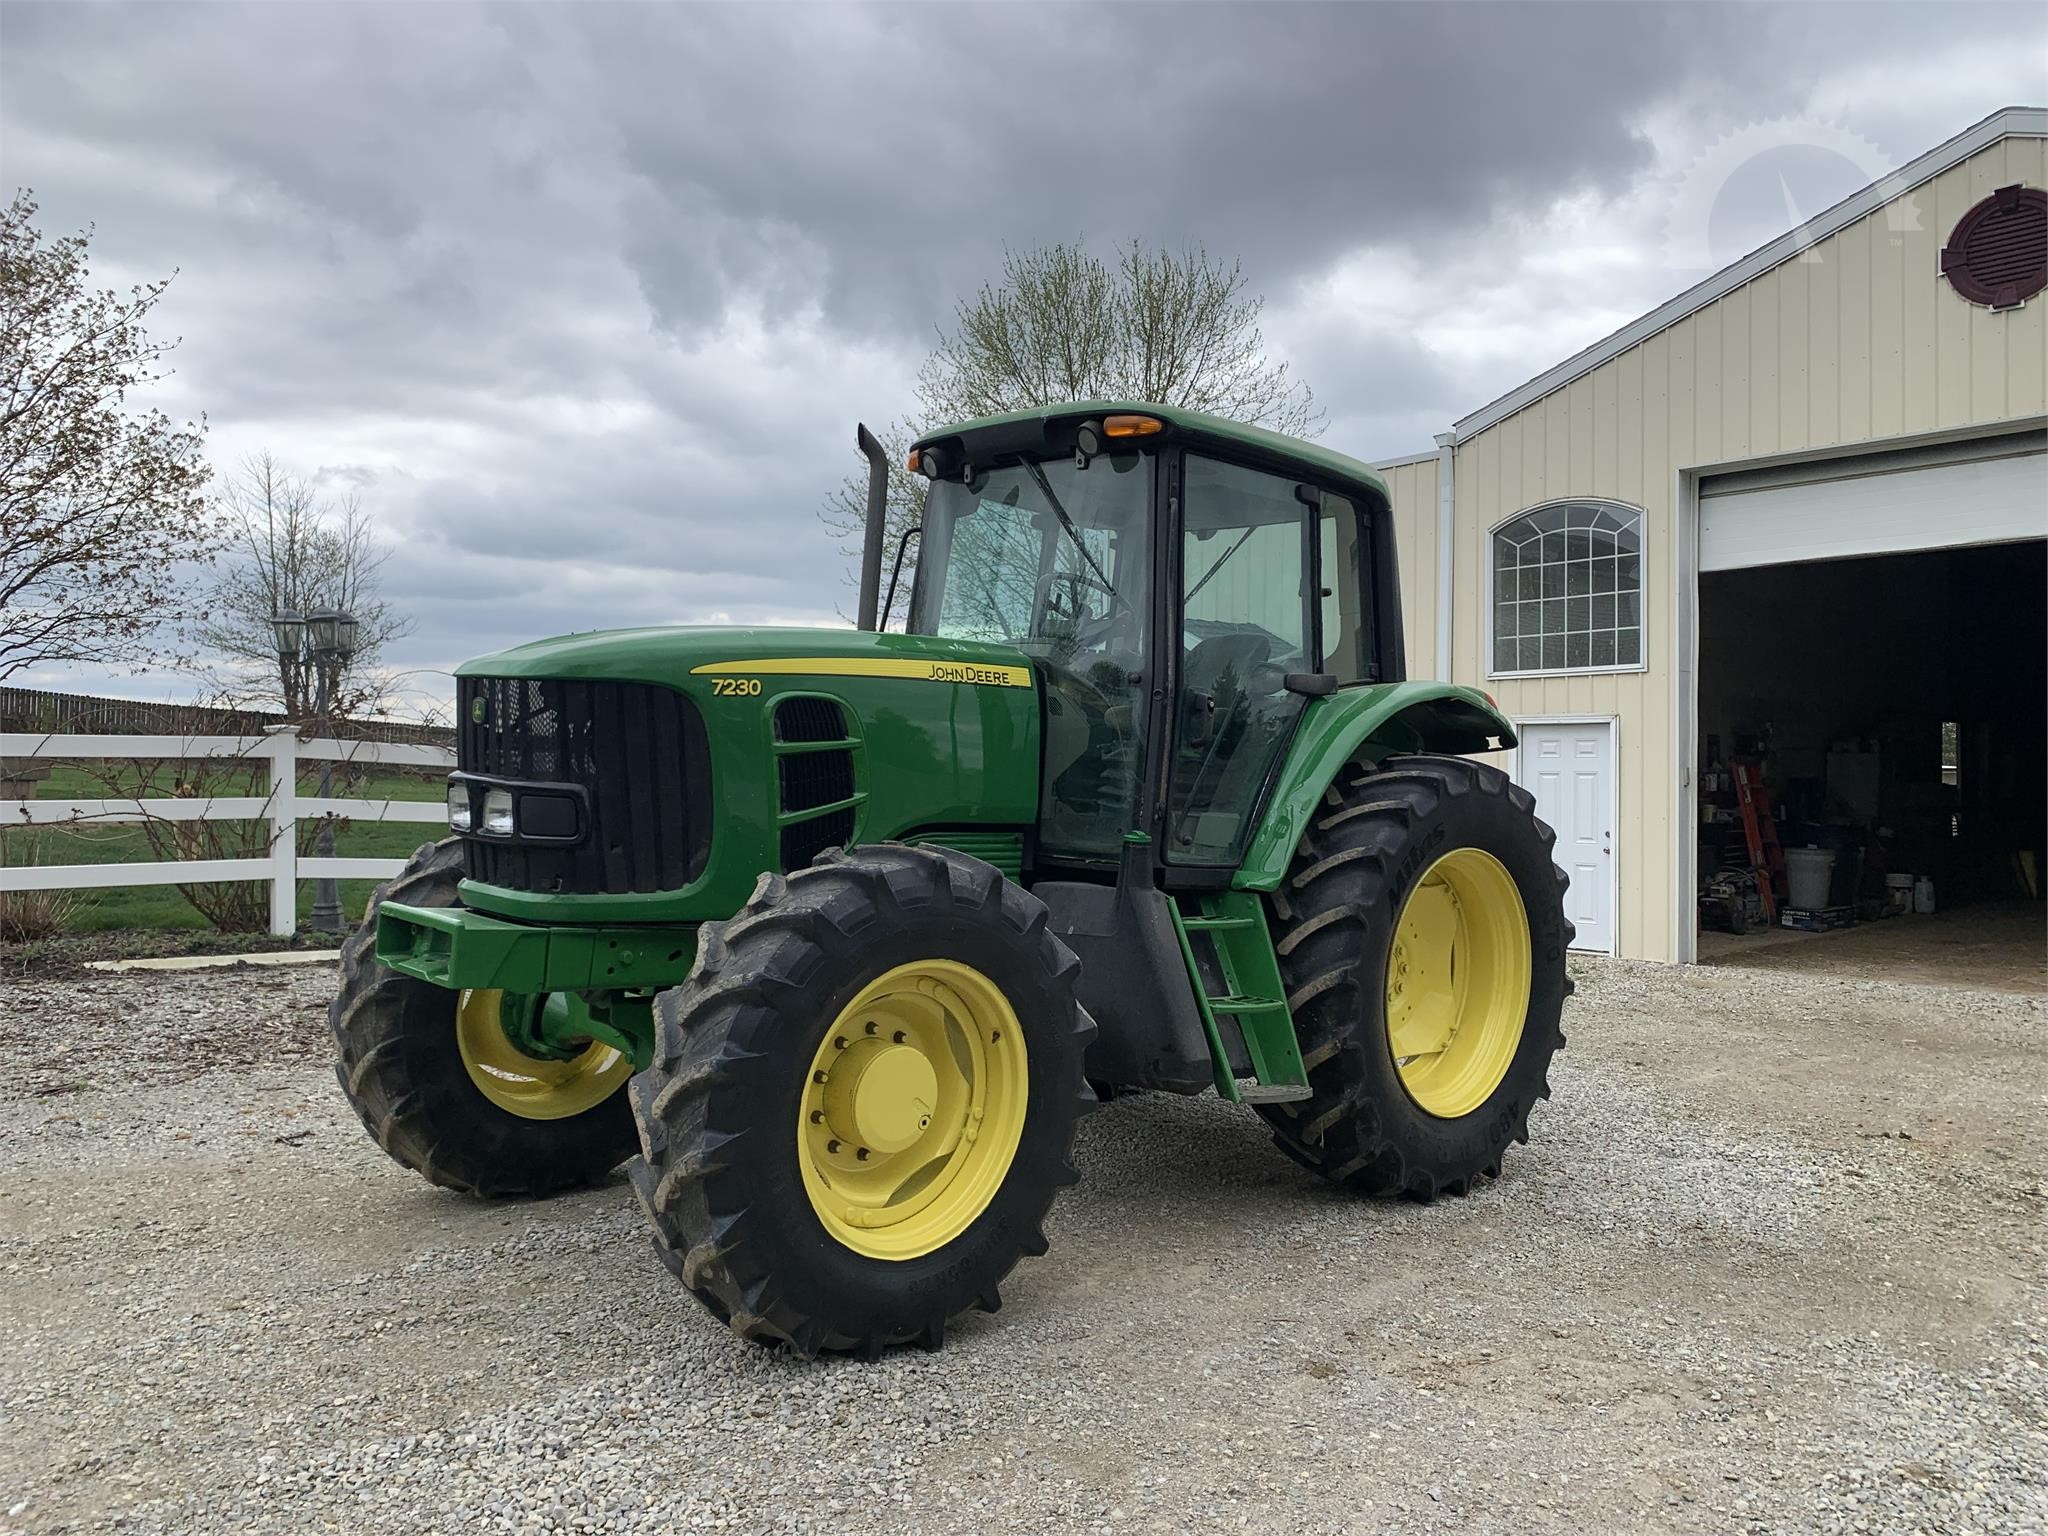 3025D Compact Tractor - New John Deere 3 Series - Quality Equipment LLC